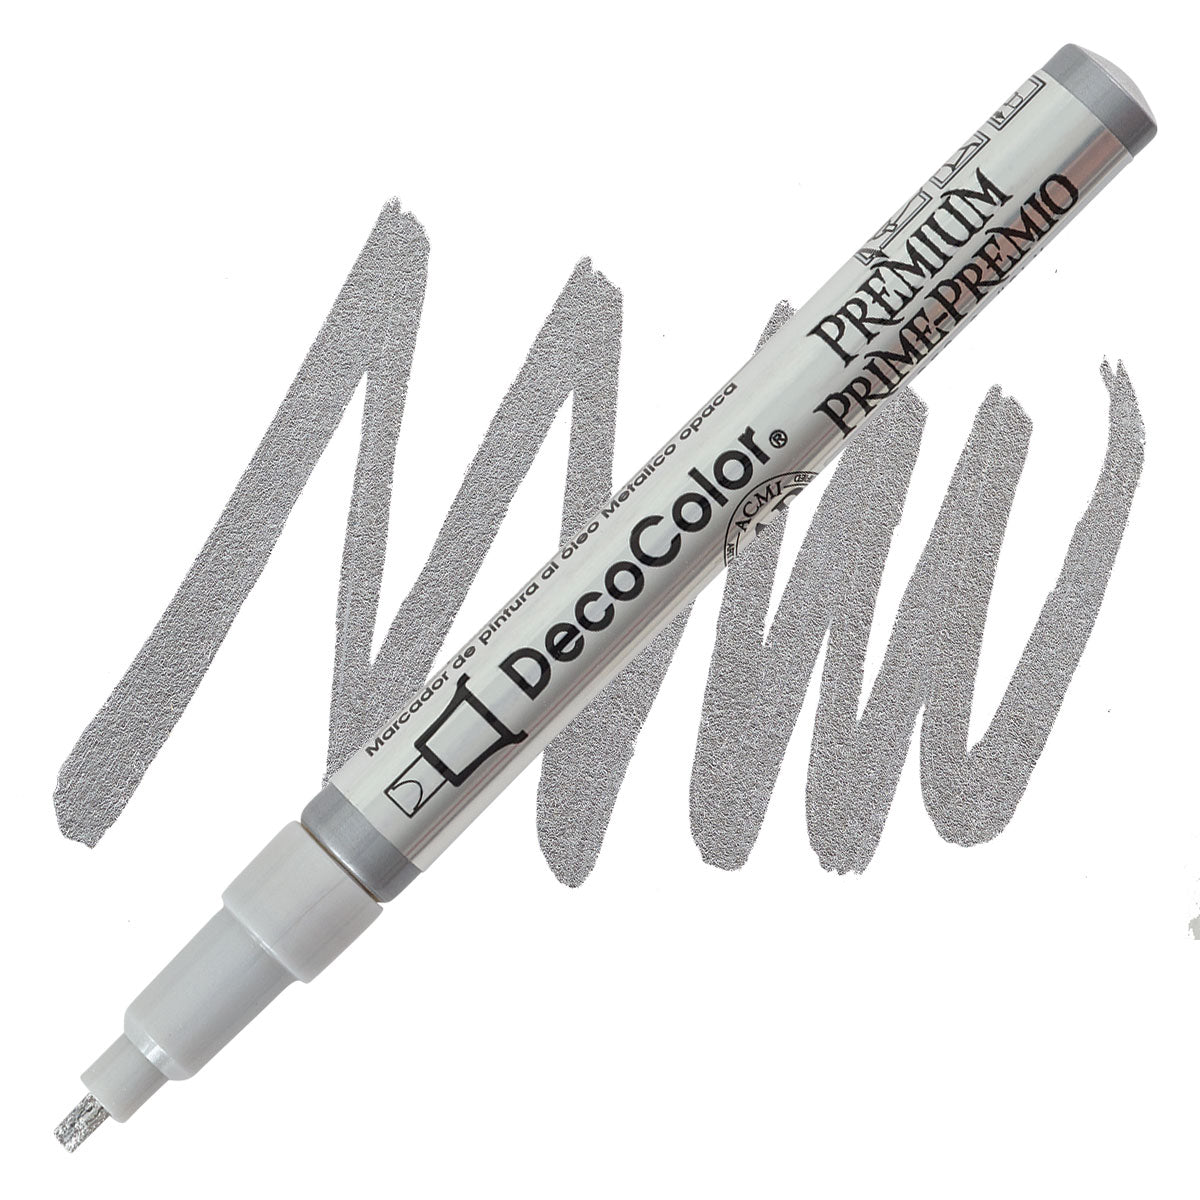 Decocolor Premium-Farbmarker, 2 mm Blattspitze/flache Spitze